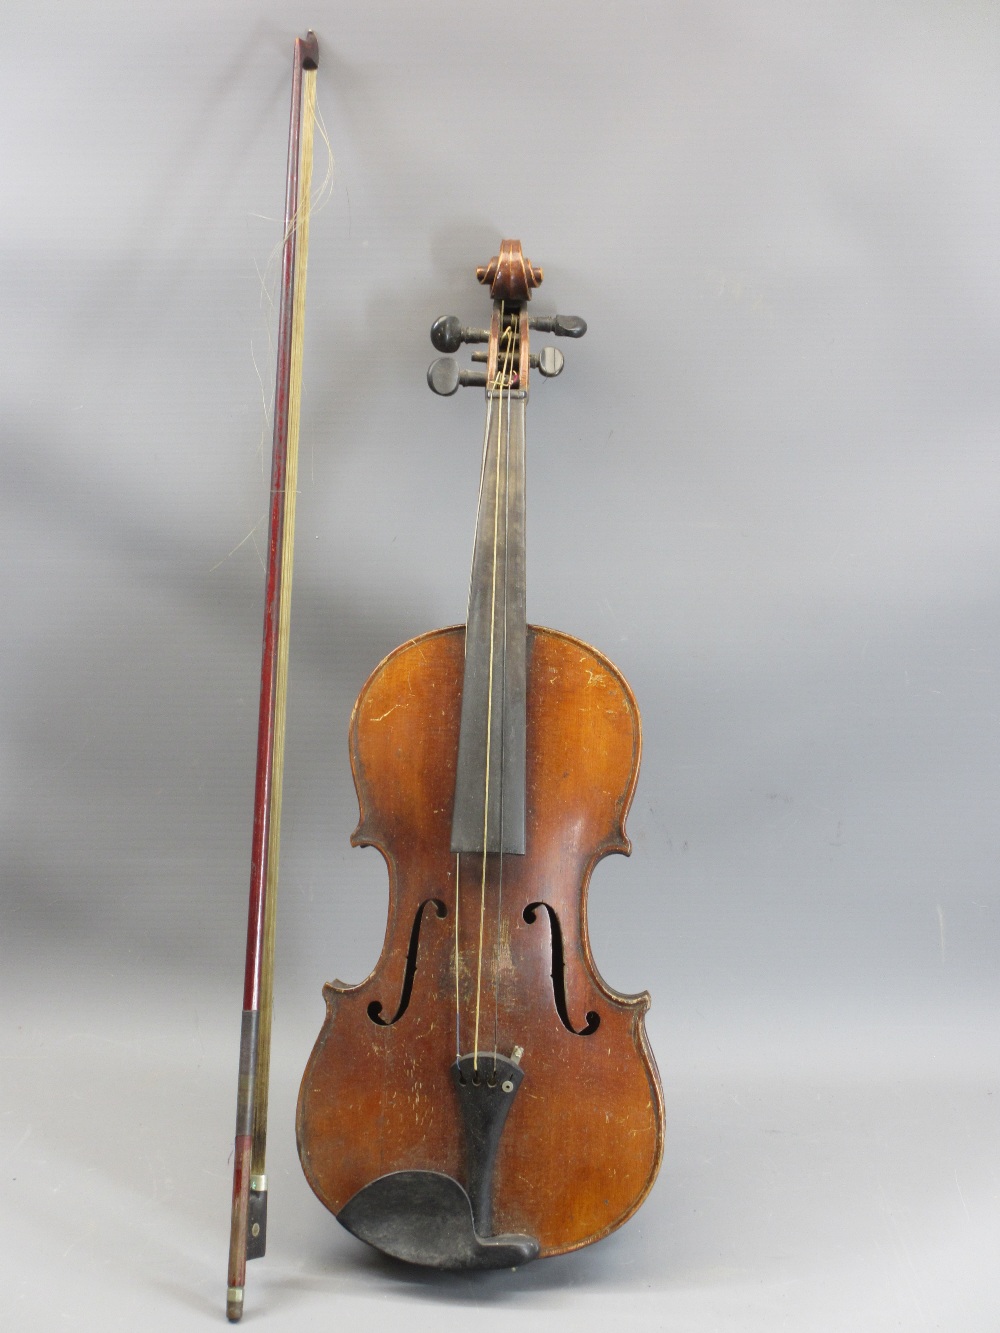 CASED VINTAGE VIOLINS (2) - both bearing 'Antonius Stradivarius' labels to the interiors, 60cm - Image 2 of 3